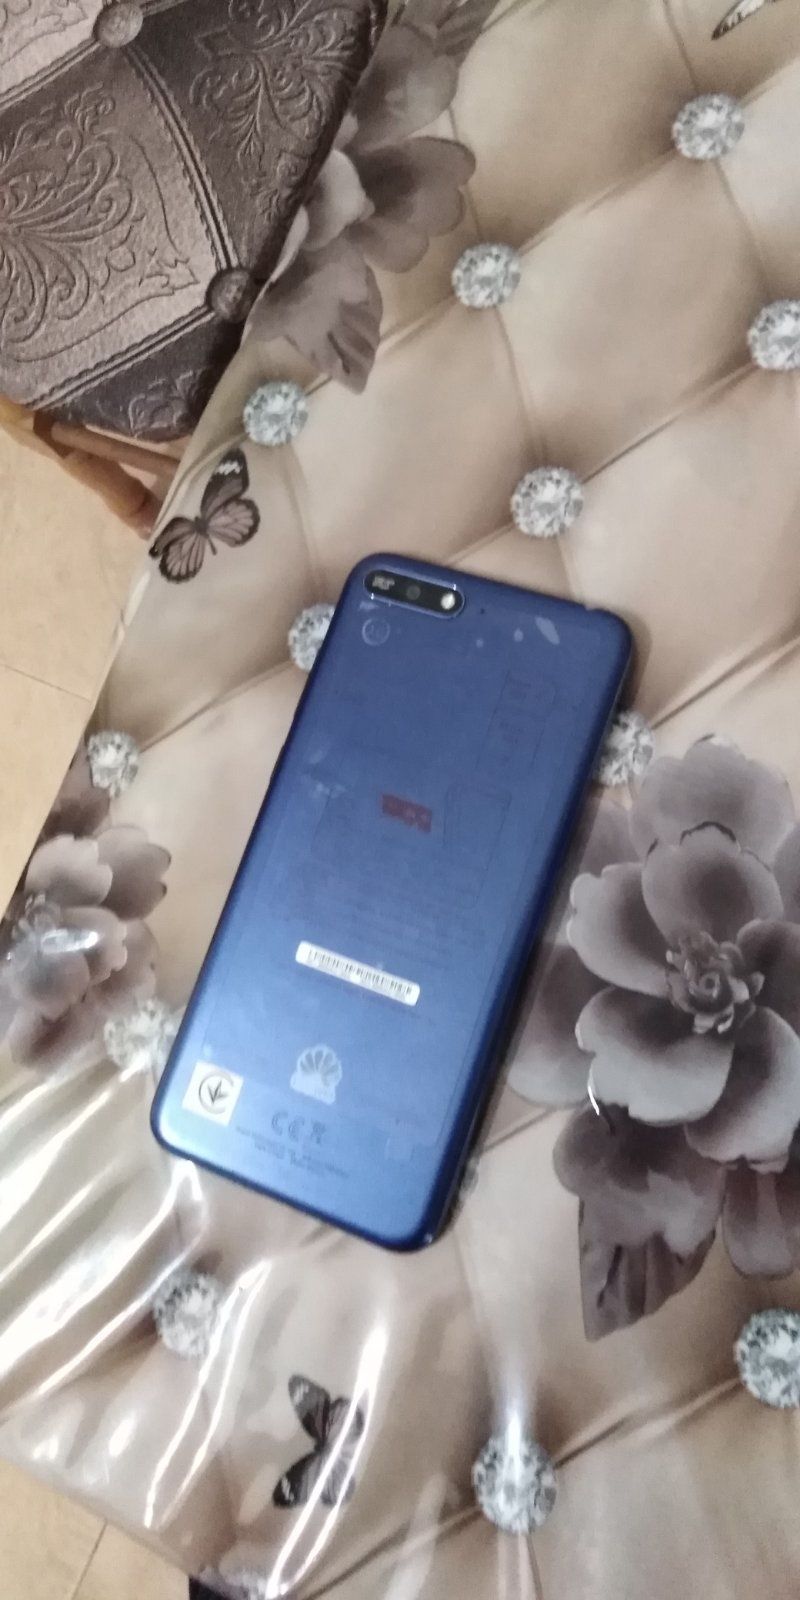 Продам смартфон Huawei Y 6 2018 model ATU L 21